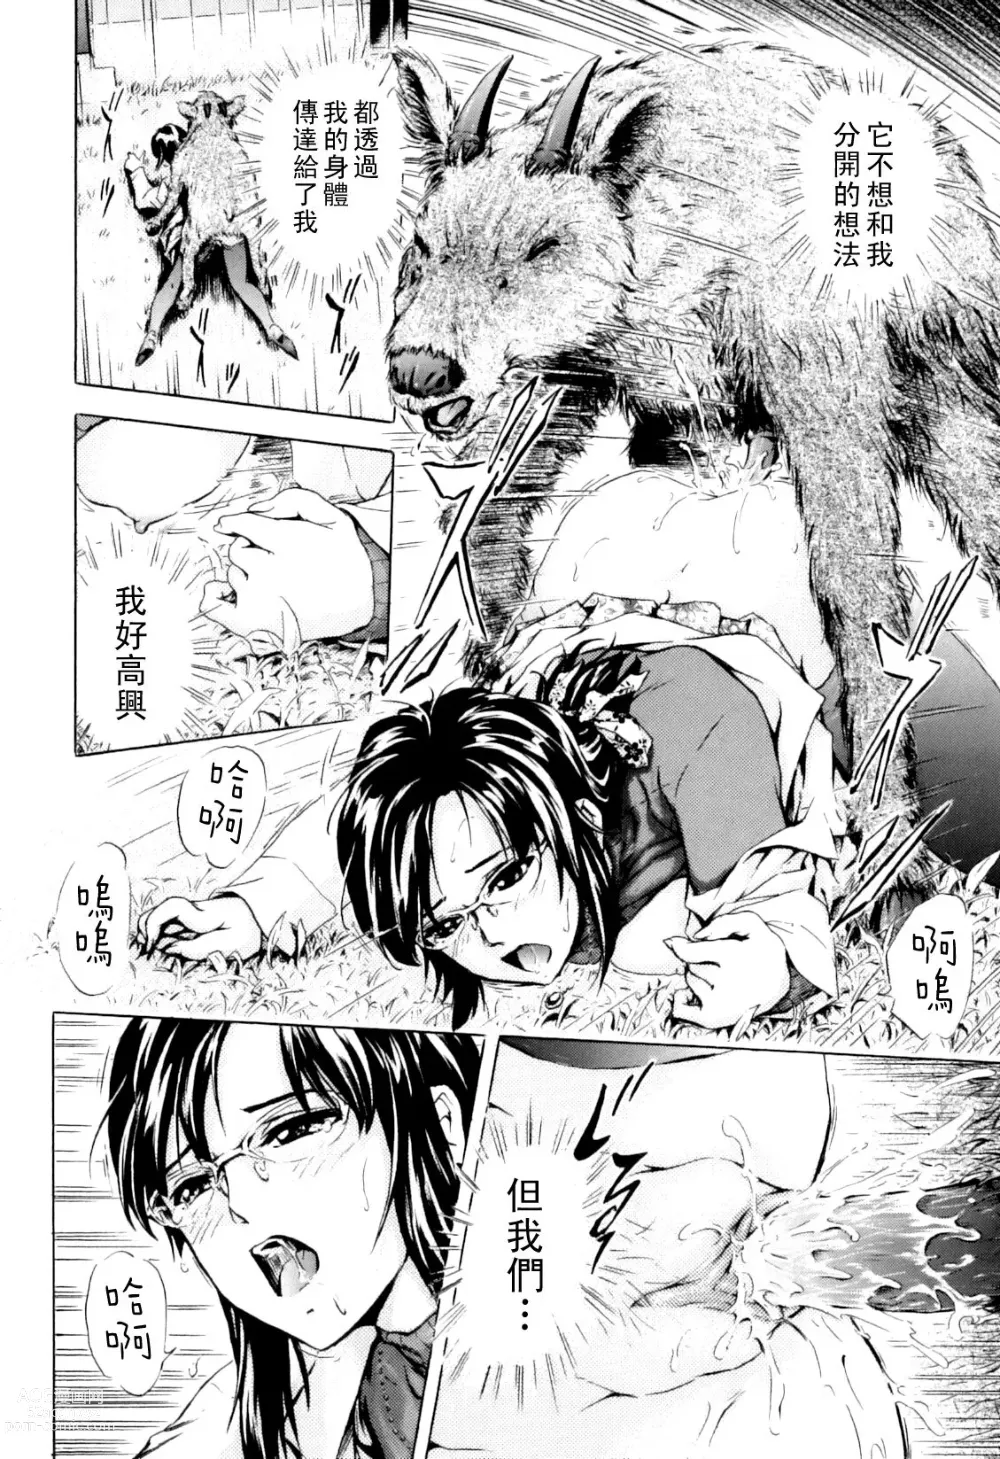 Page 14 of manga Tokubetsu Tennen Kinenbutsu - Special Natural Monuments